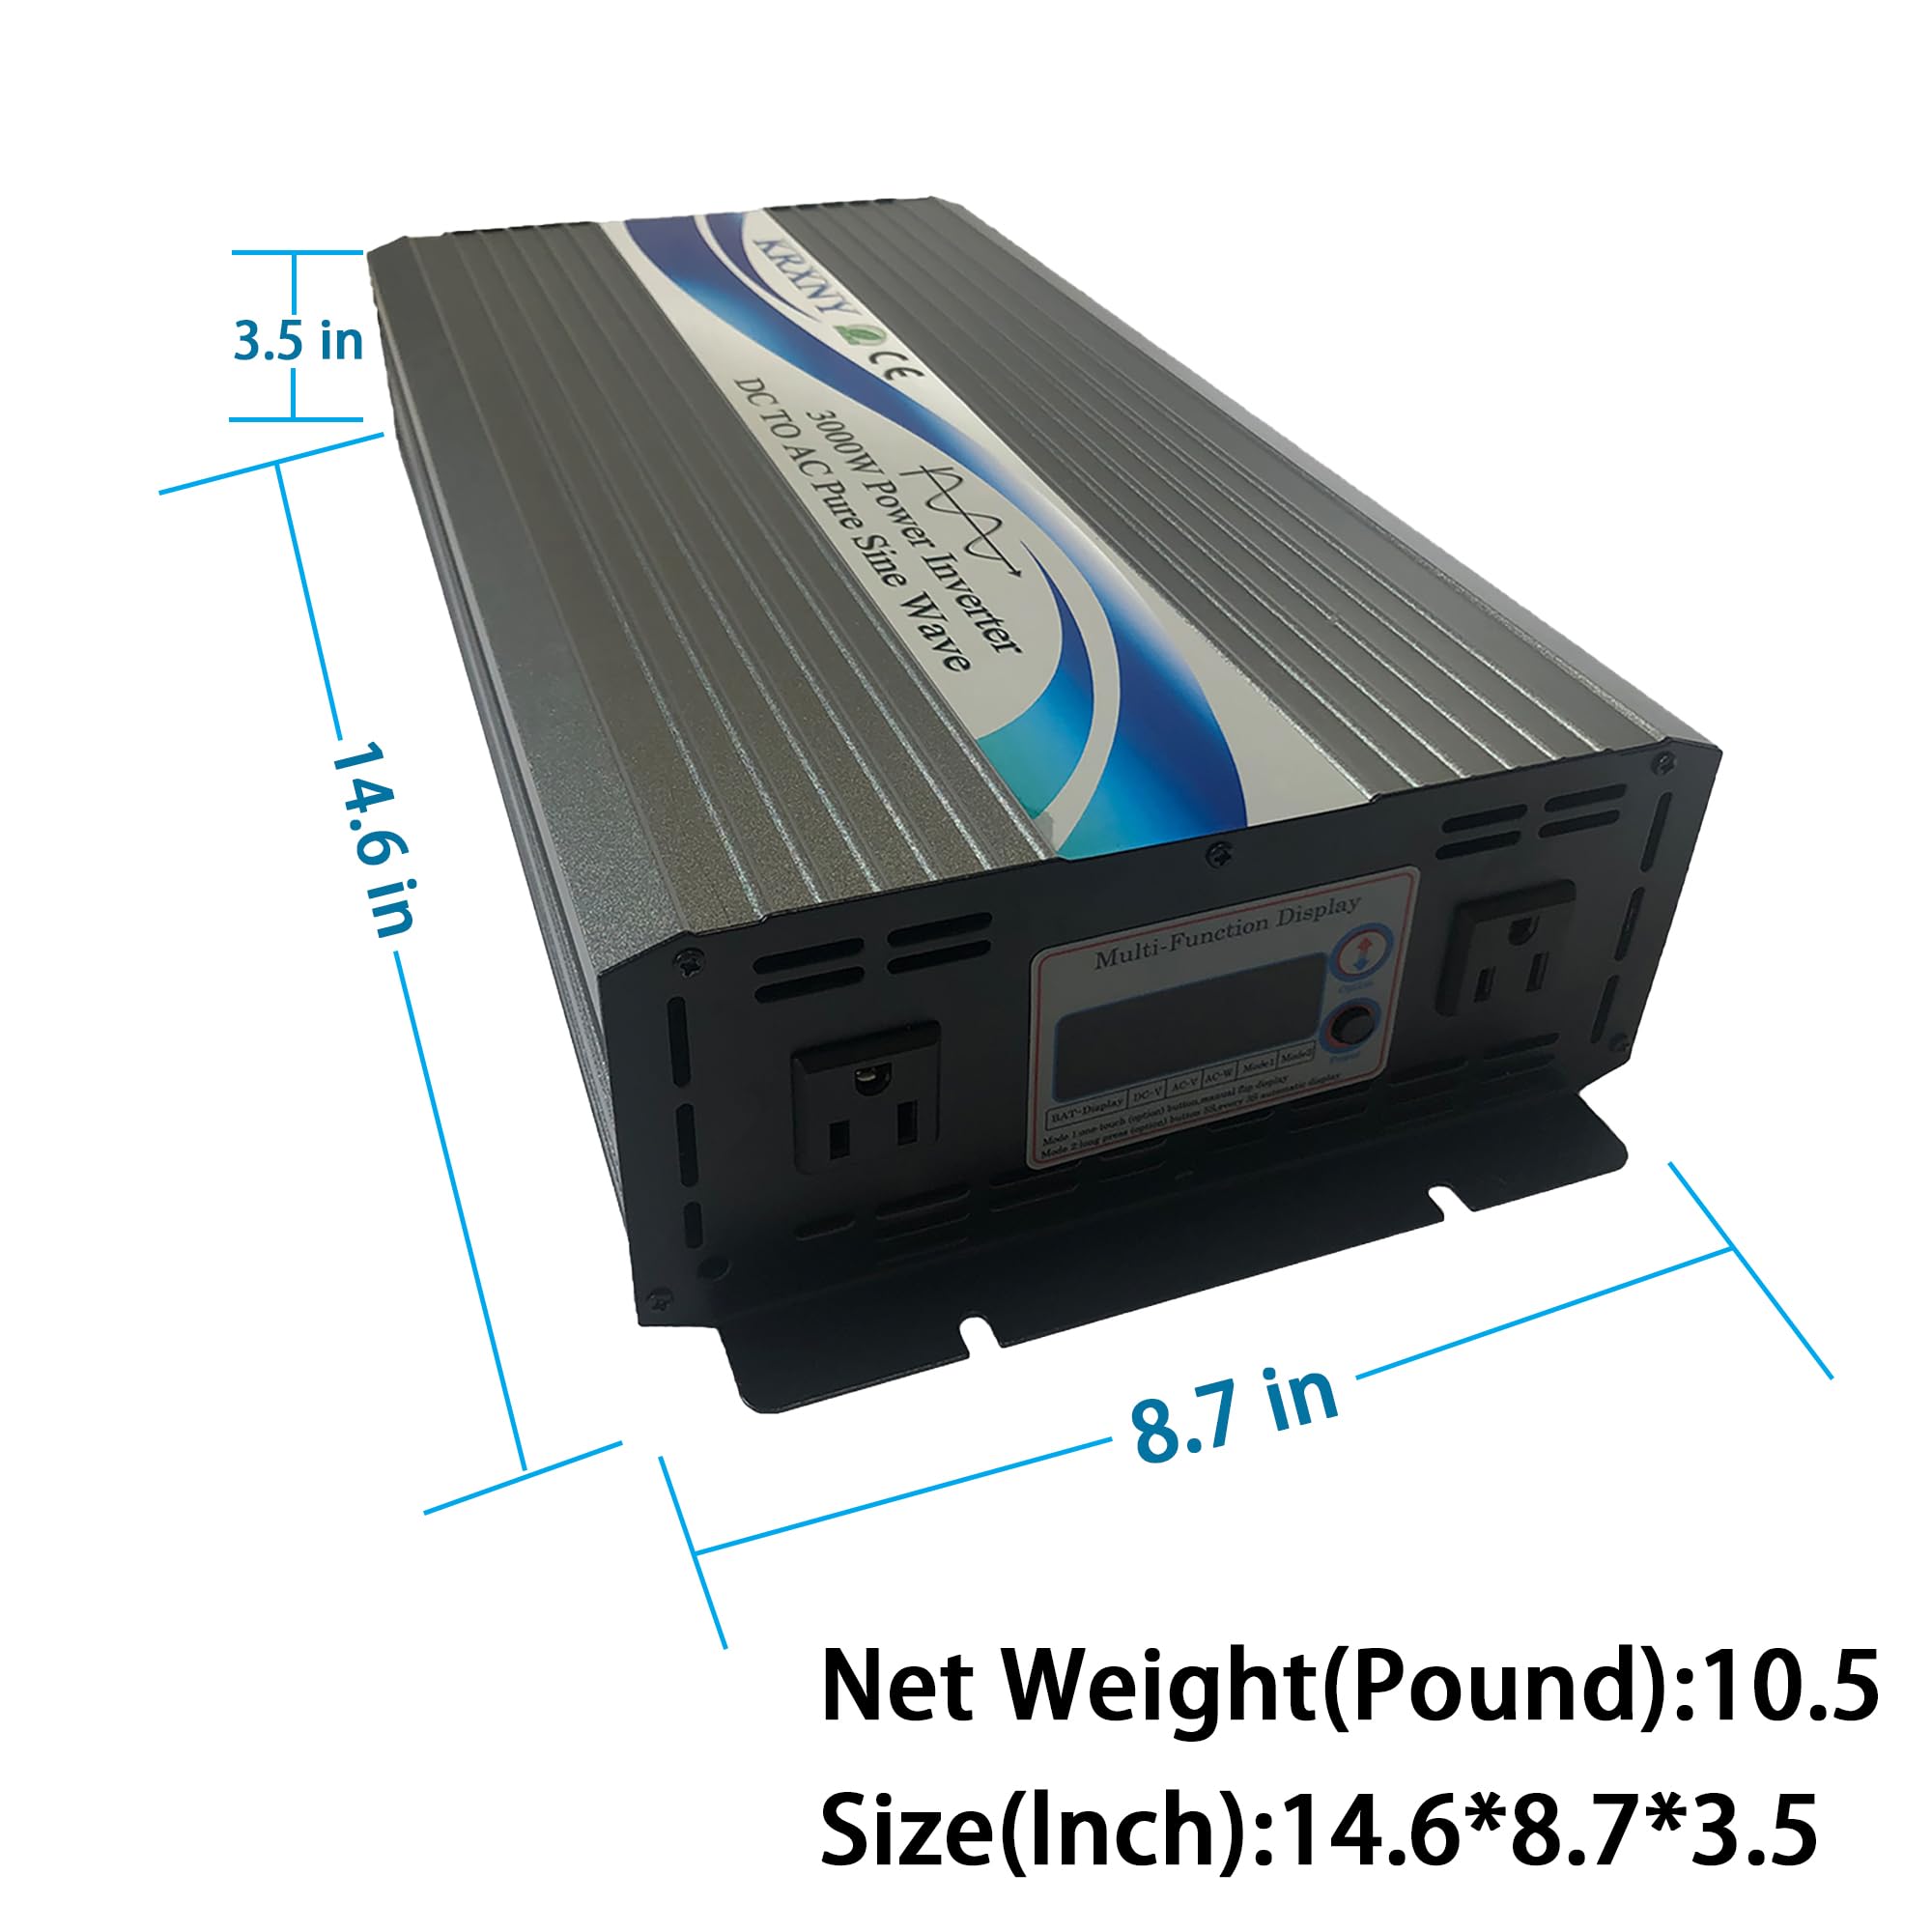 KRXNY 3000W Off Grid Pure Sine Wave Power Inverter 48V DC to 110V 120V AC 60HZ with LCD Display